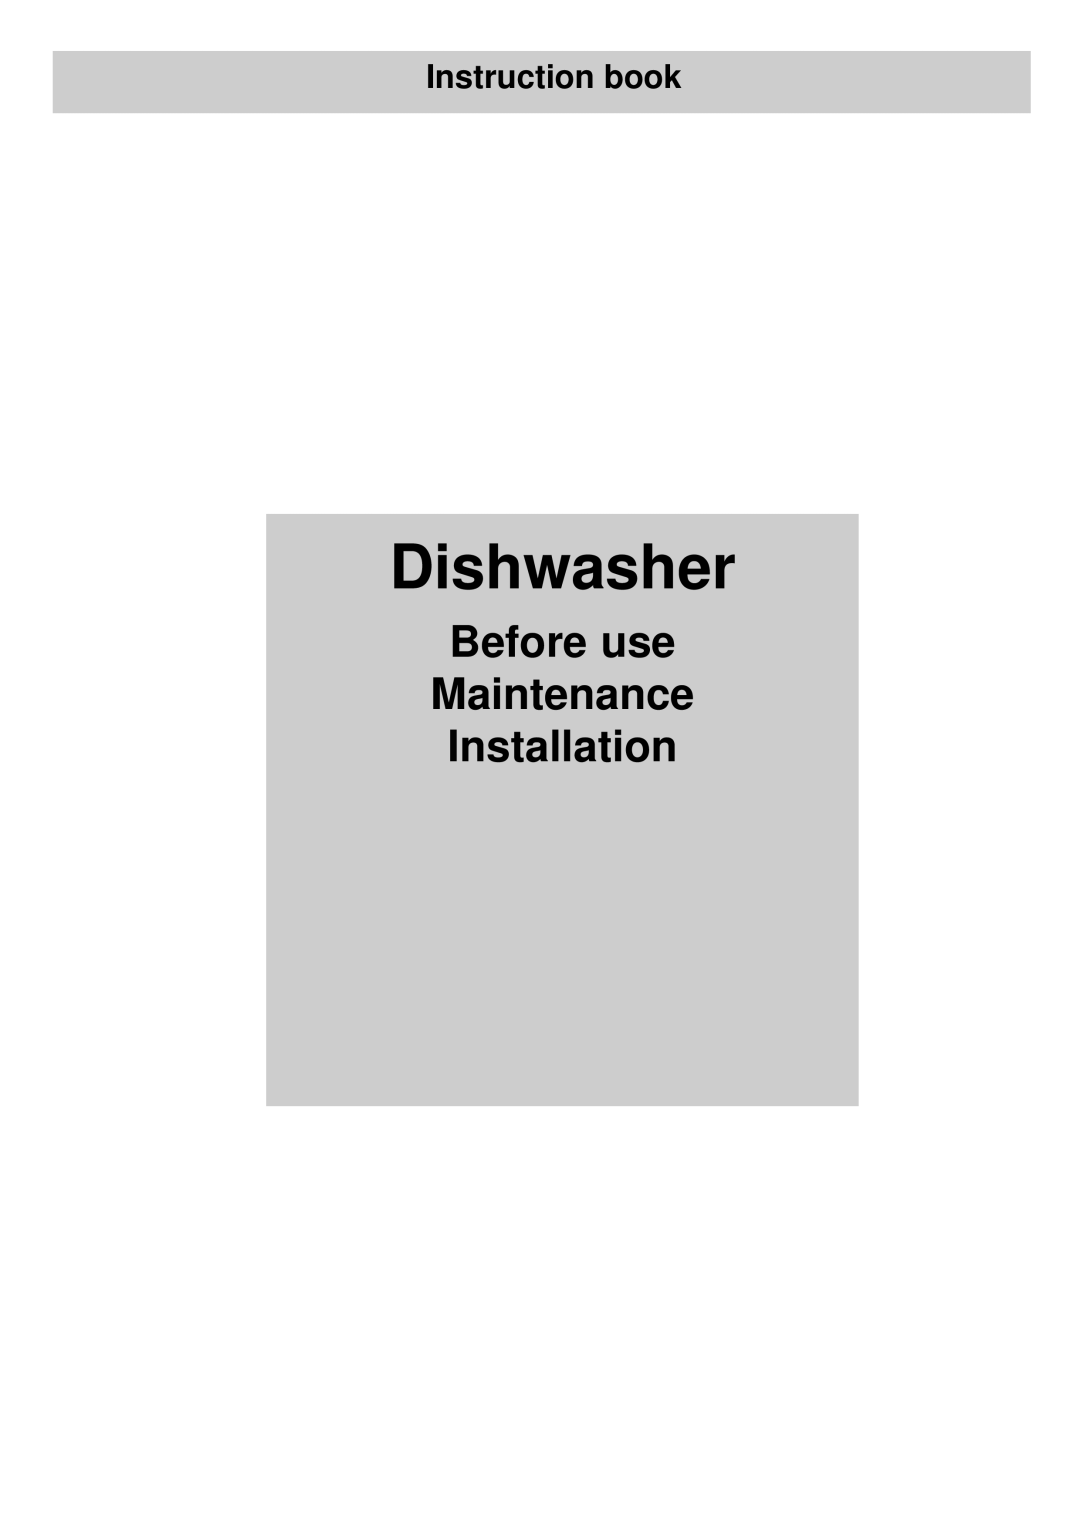 Zanussi DA 6141 D manual Dishwasher, Before use Maintenance Installation, Instruction book 